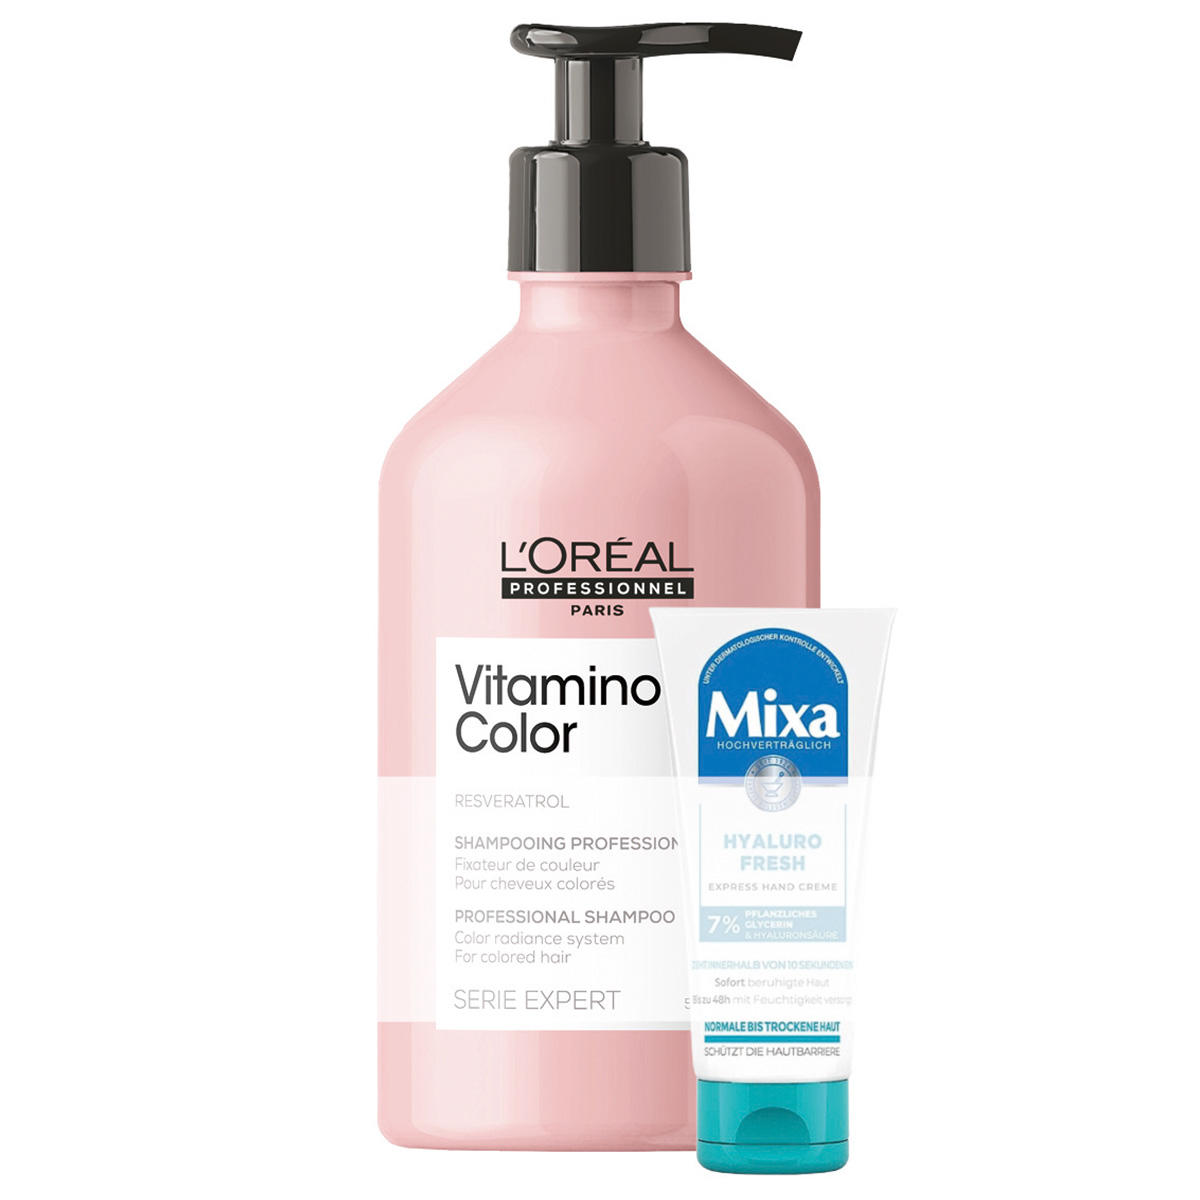 L'Oréal Professionnel Paris Vitamino Color Shampoo 500 ml + gift  - 1